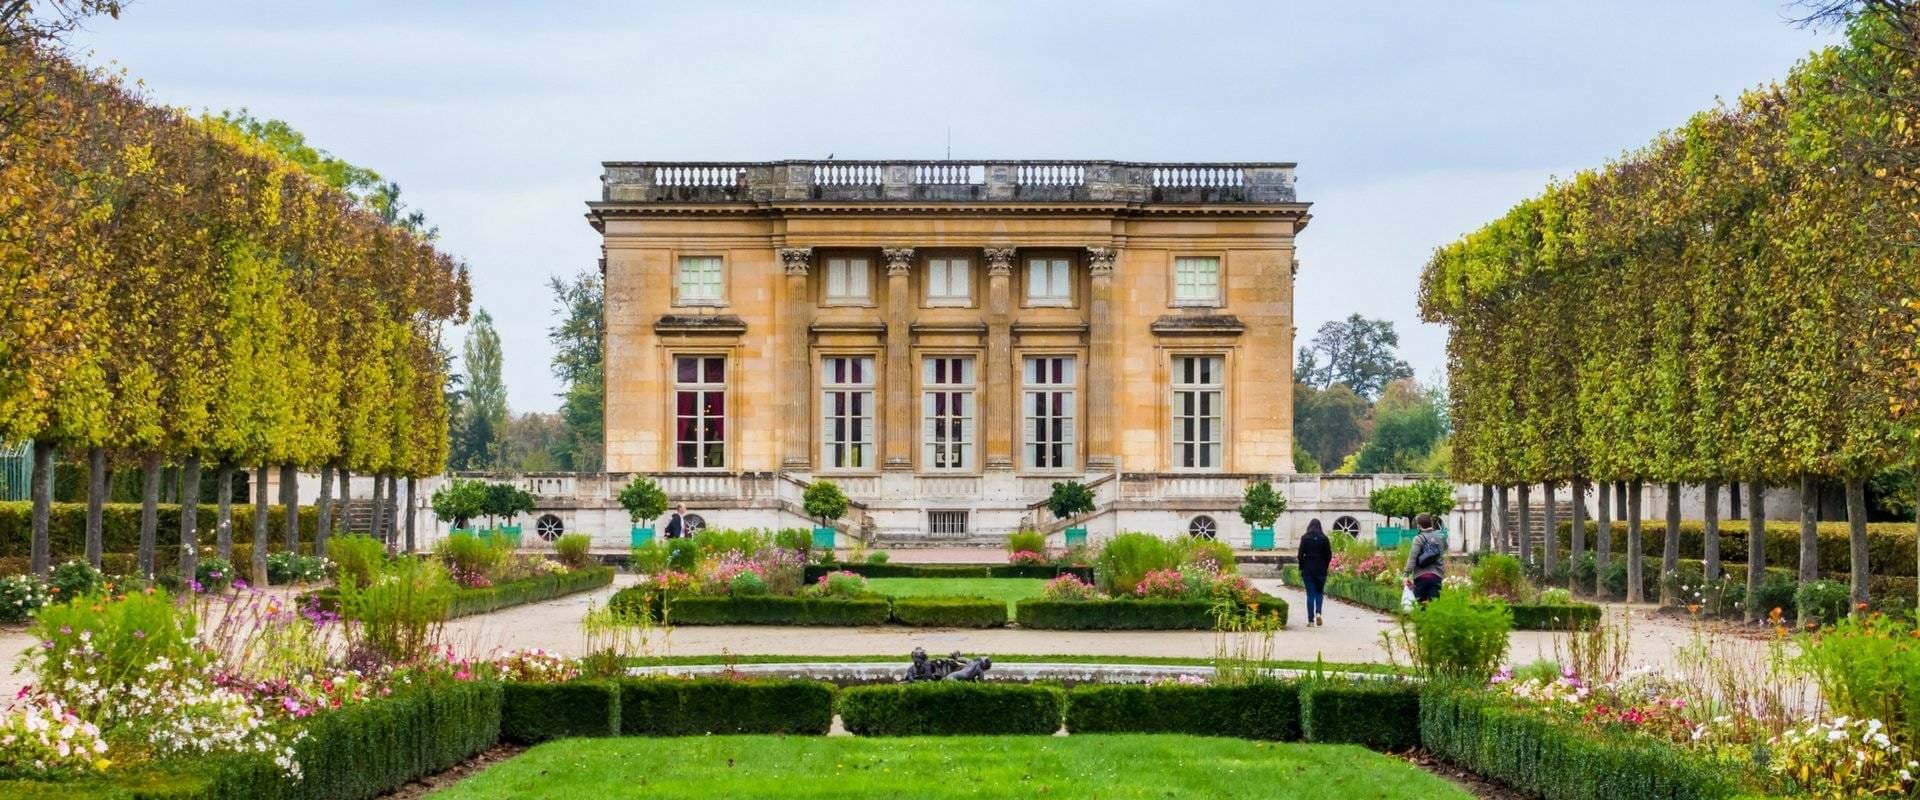 Marie Antoinette's Petit Trianon - City Wonders